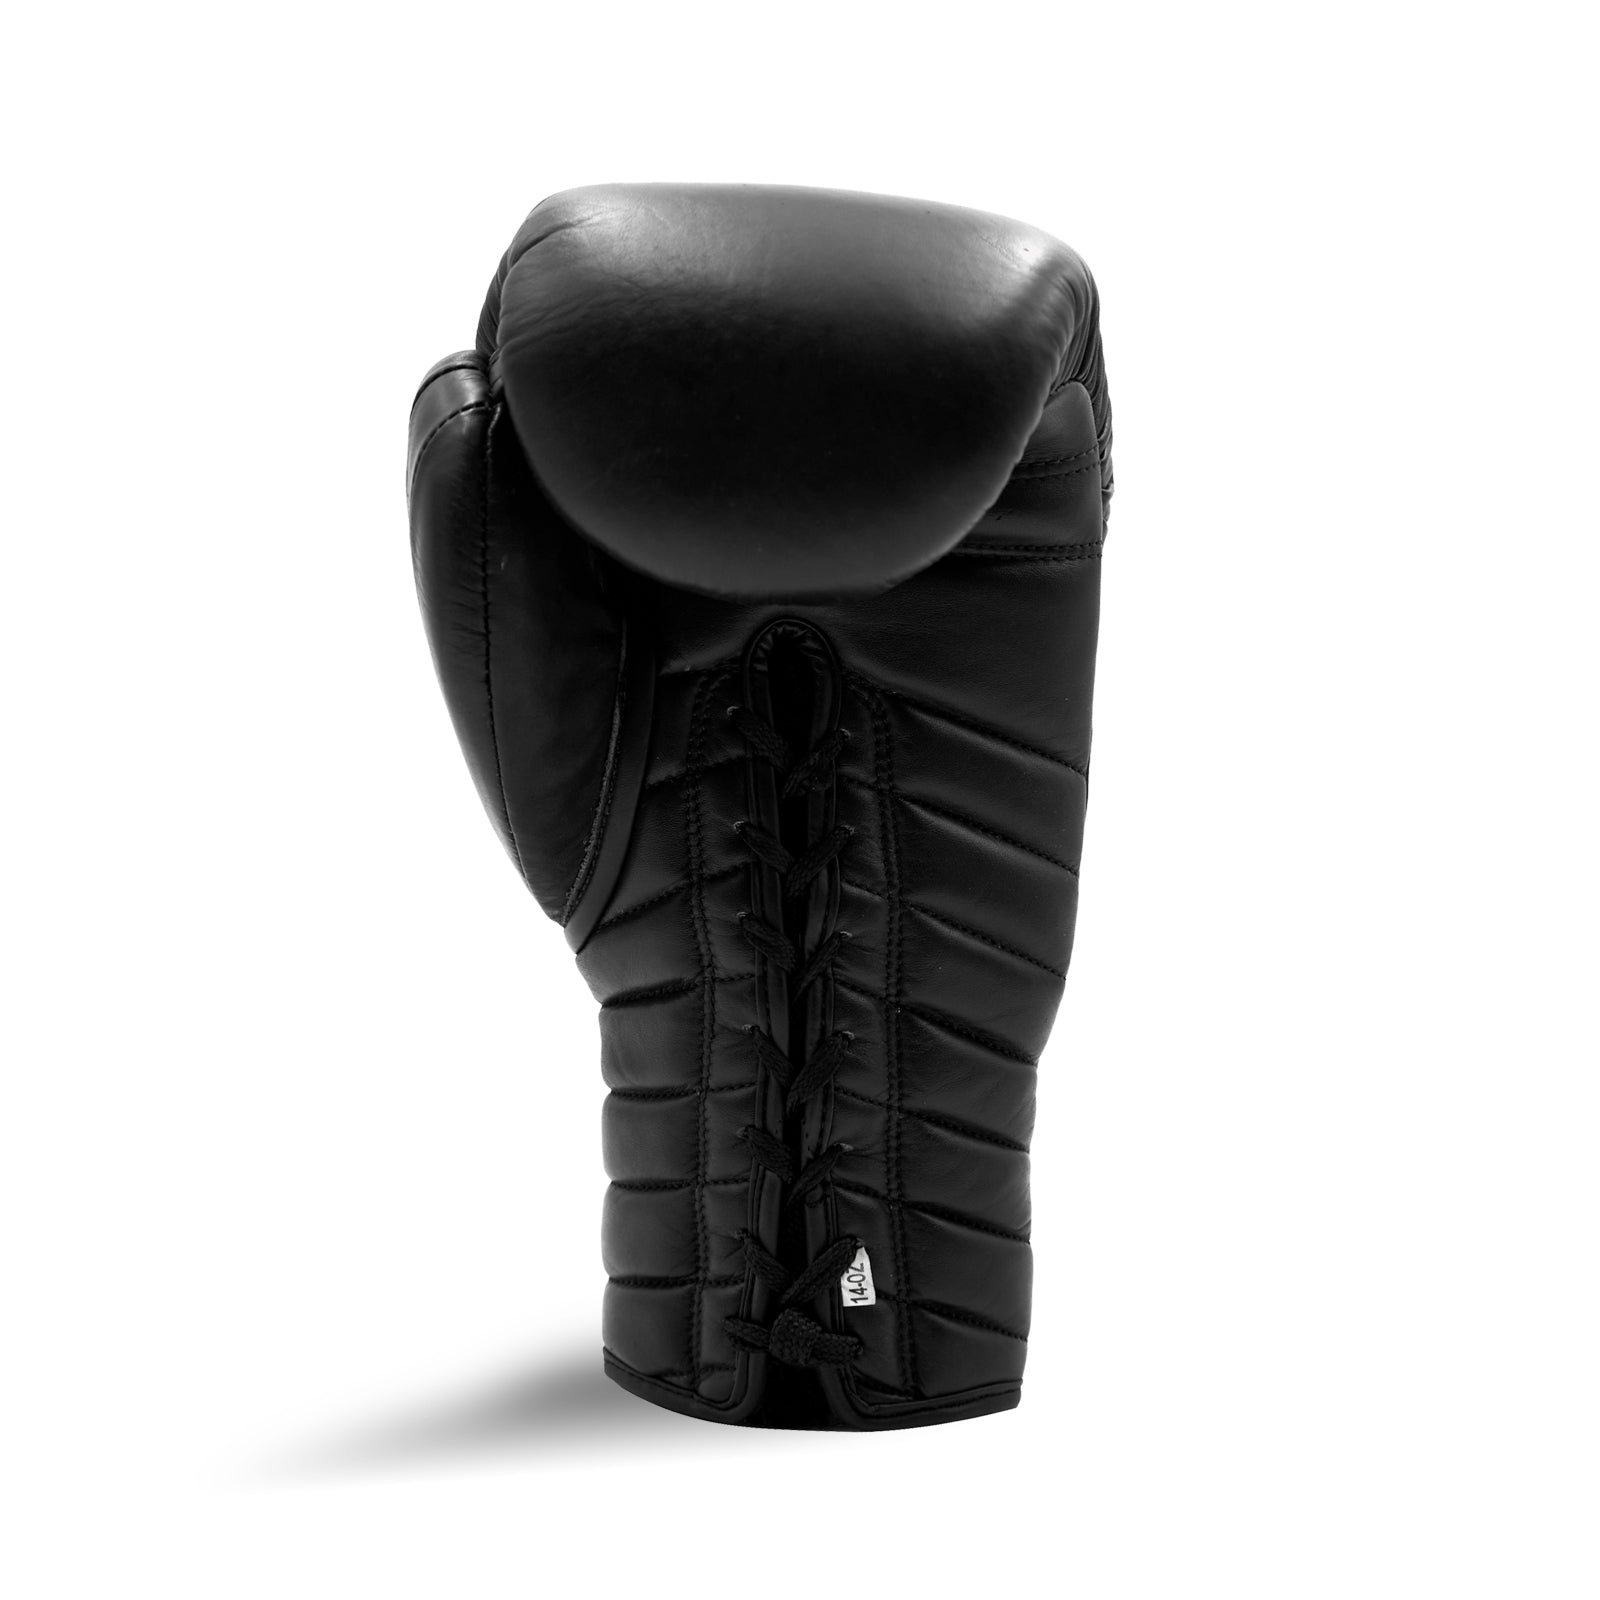 Ringside Boxing UK Hunter Series Sparring Glove Black on white background reverse angle